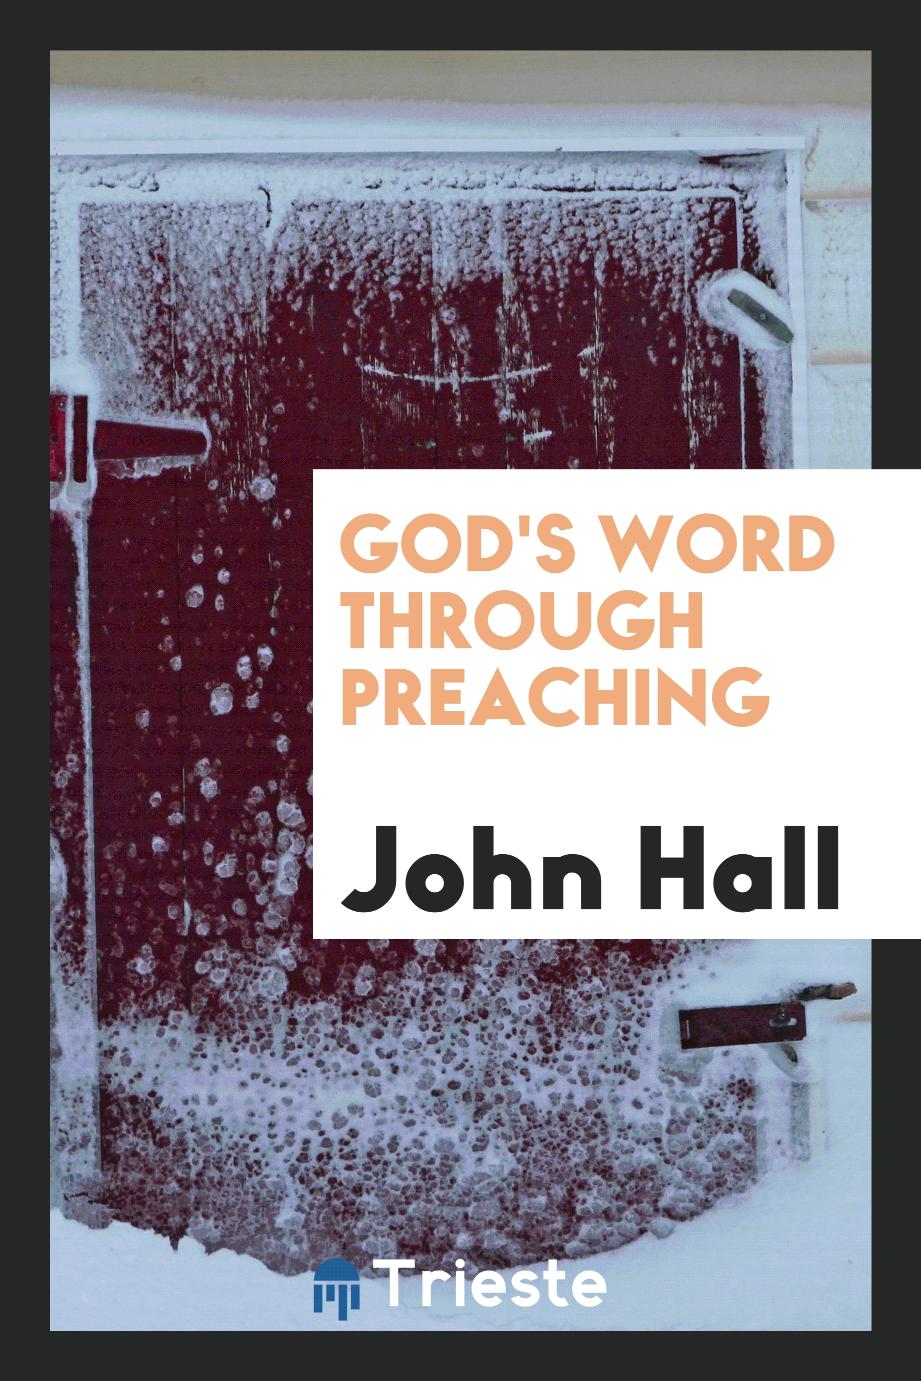 God's word through preaching